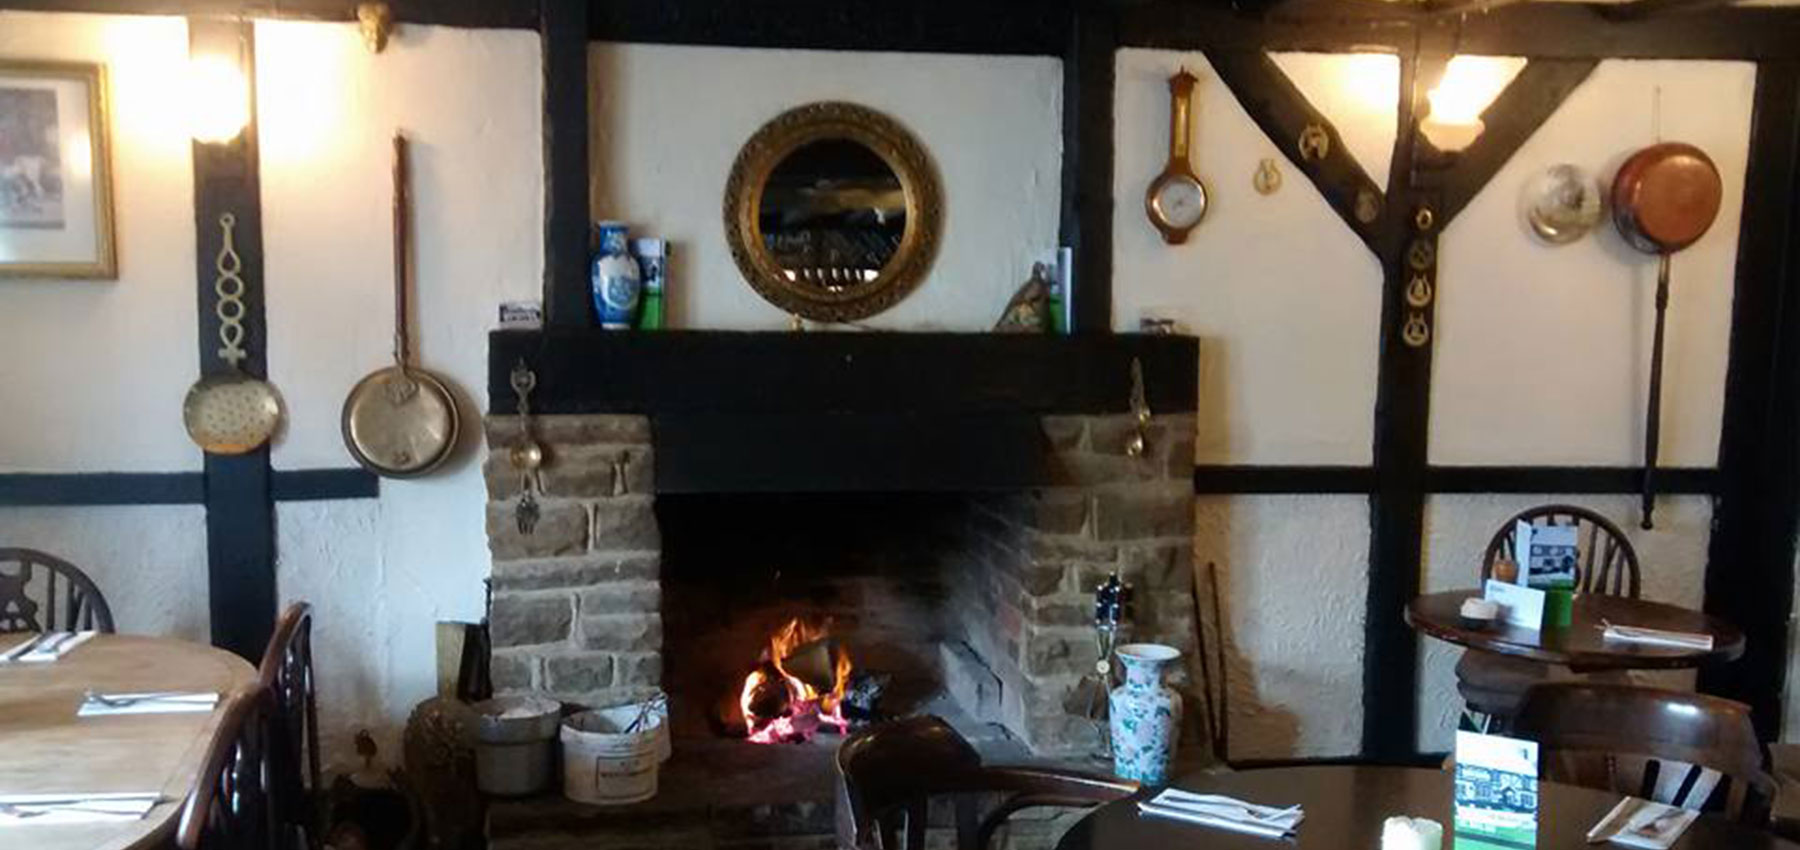 Fireplace at The Royal Oak, Wrecclesham near Farnham